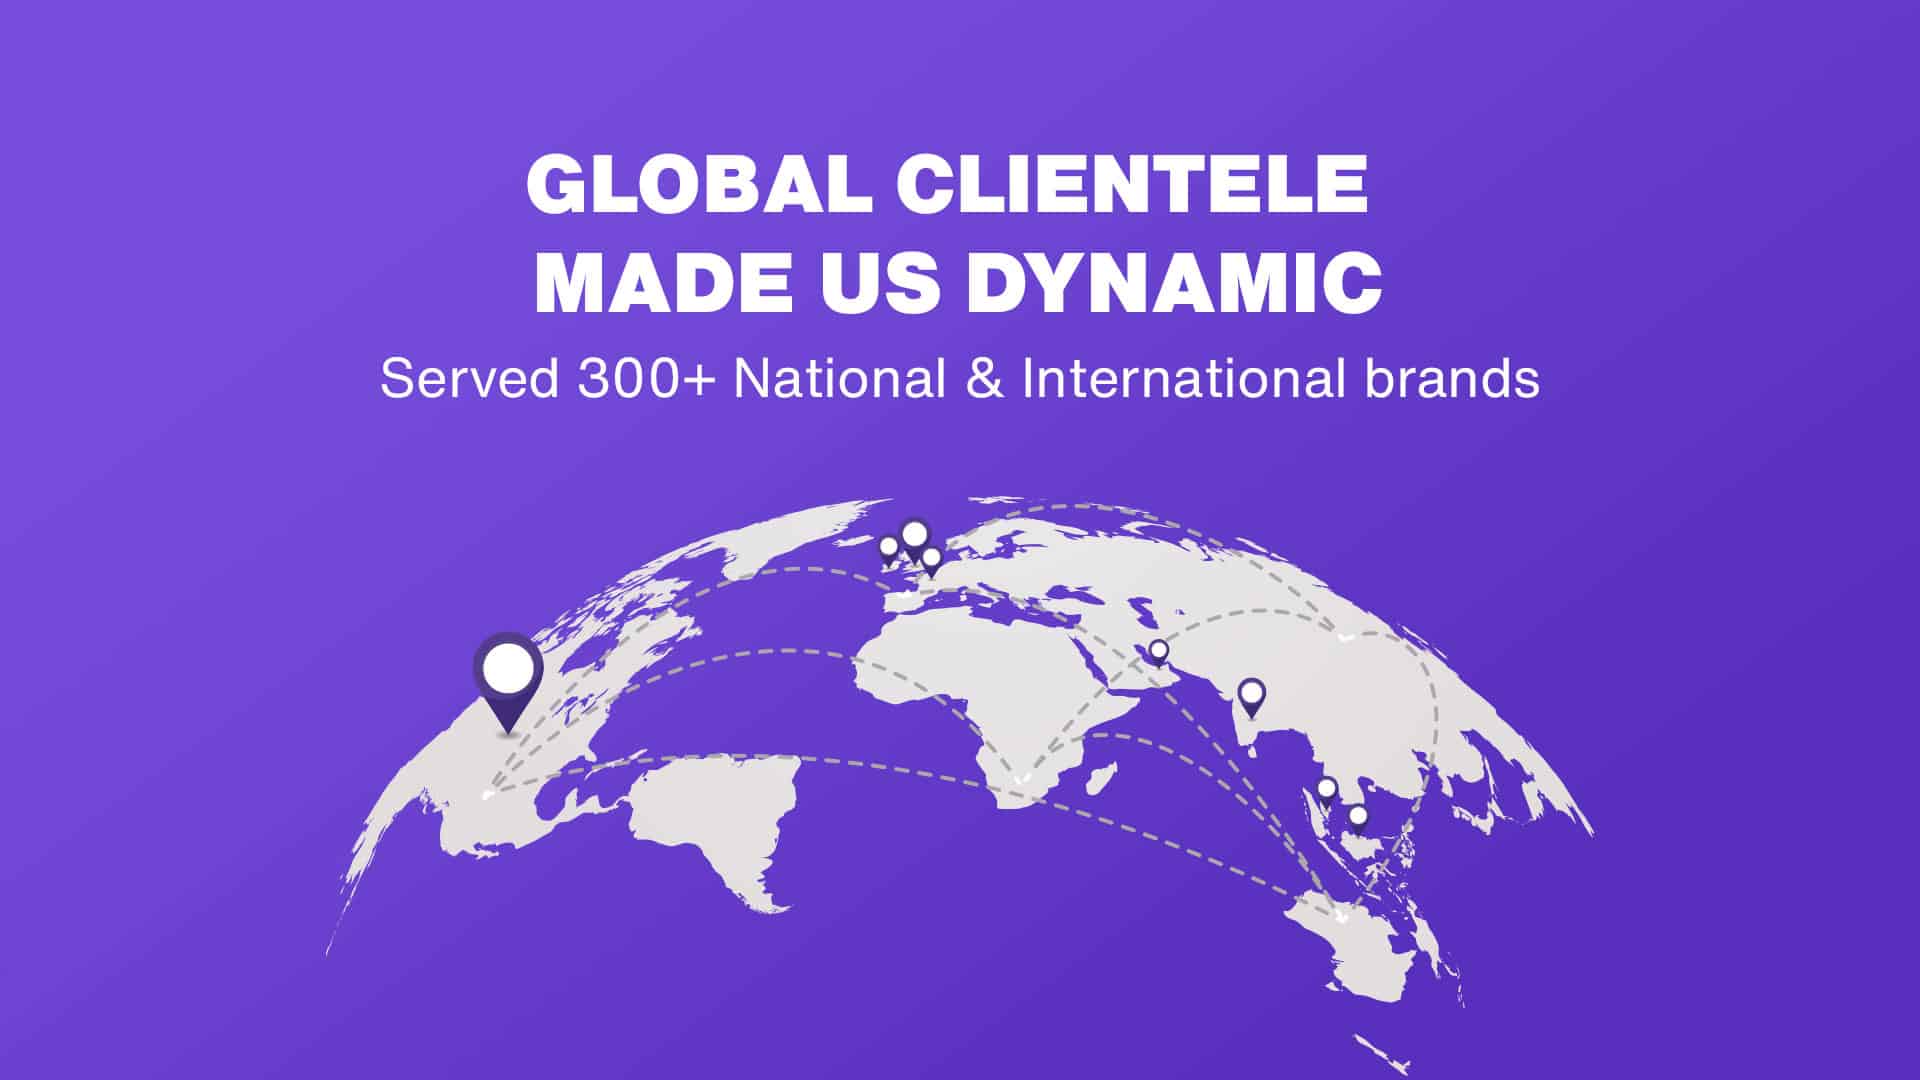 Served 300+ National and International brands